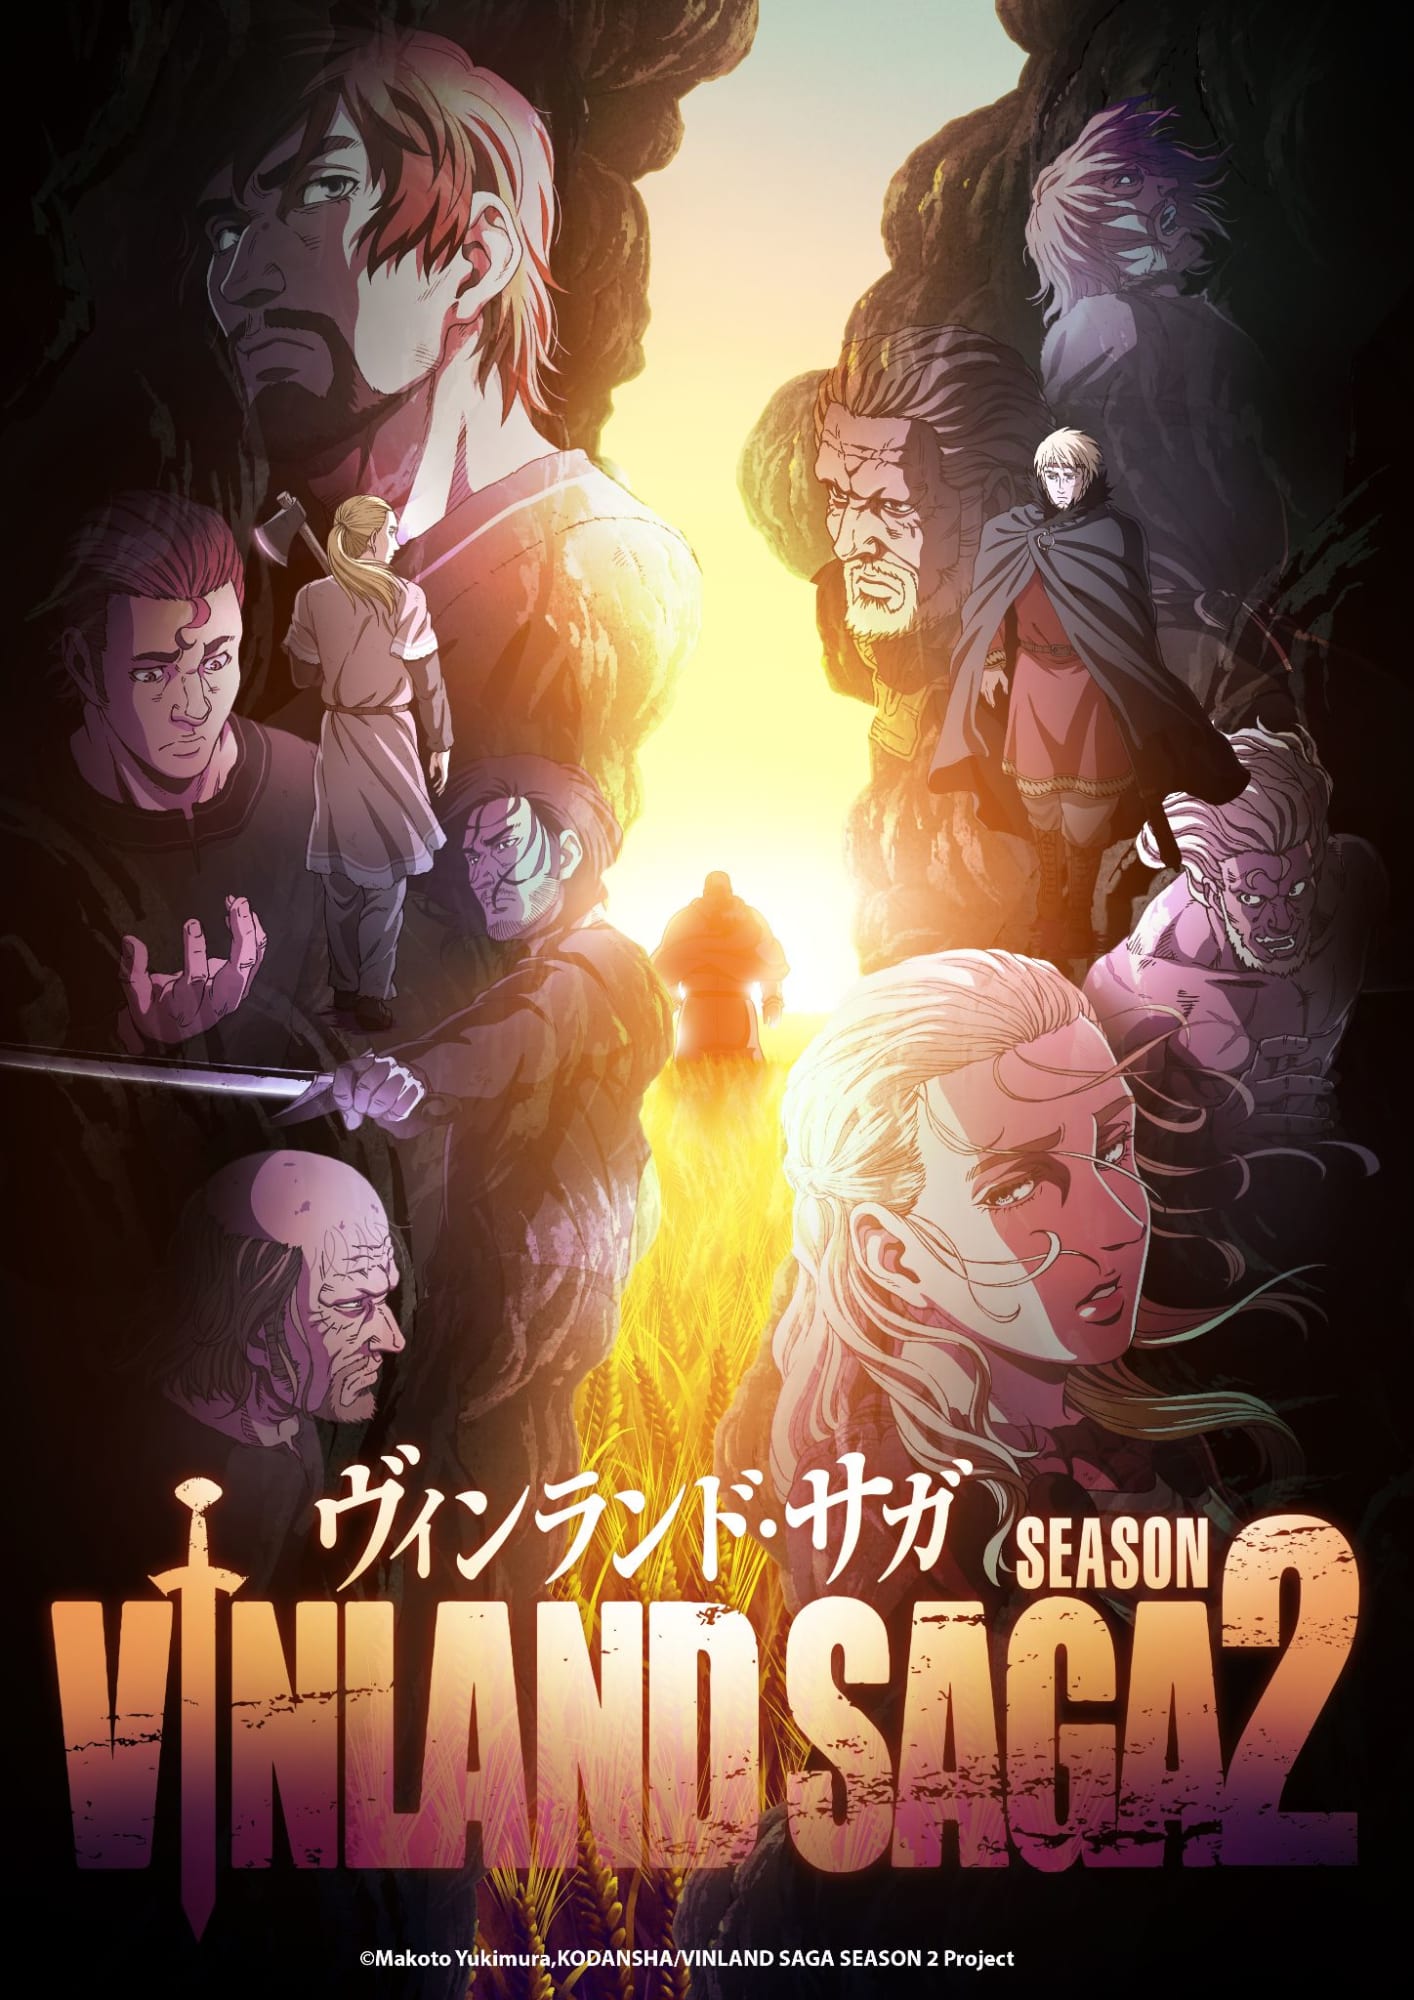 Vinland Saga season 2 coming to Netflix and Crunchyroll in 2023